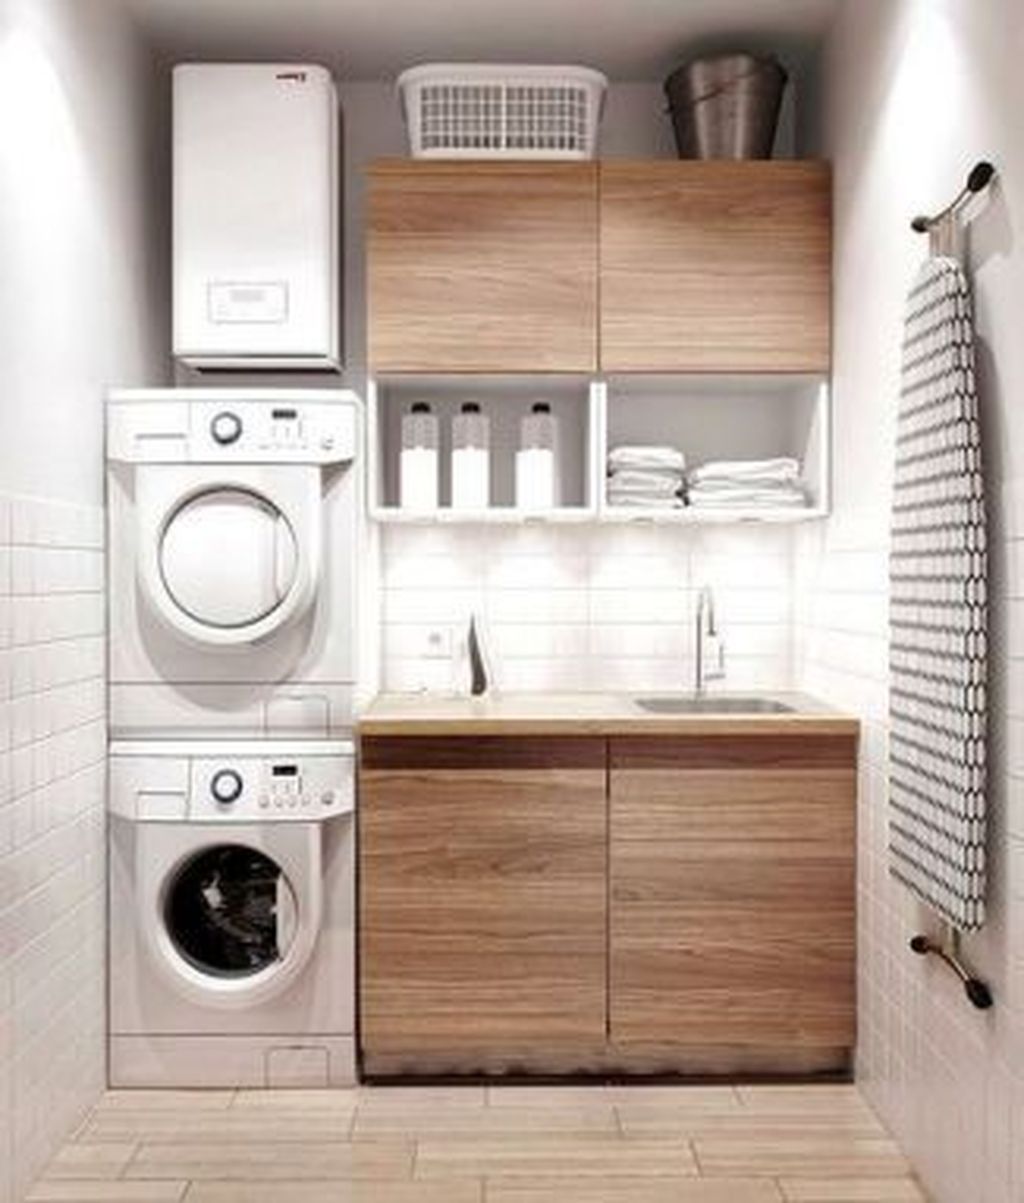 Inspiring Small Laundry Room Design And Decor Ideas 21